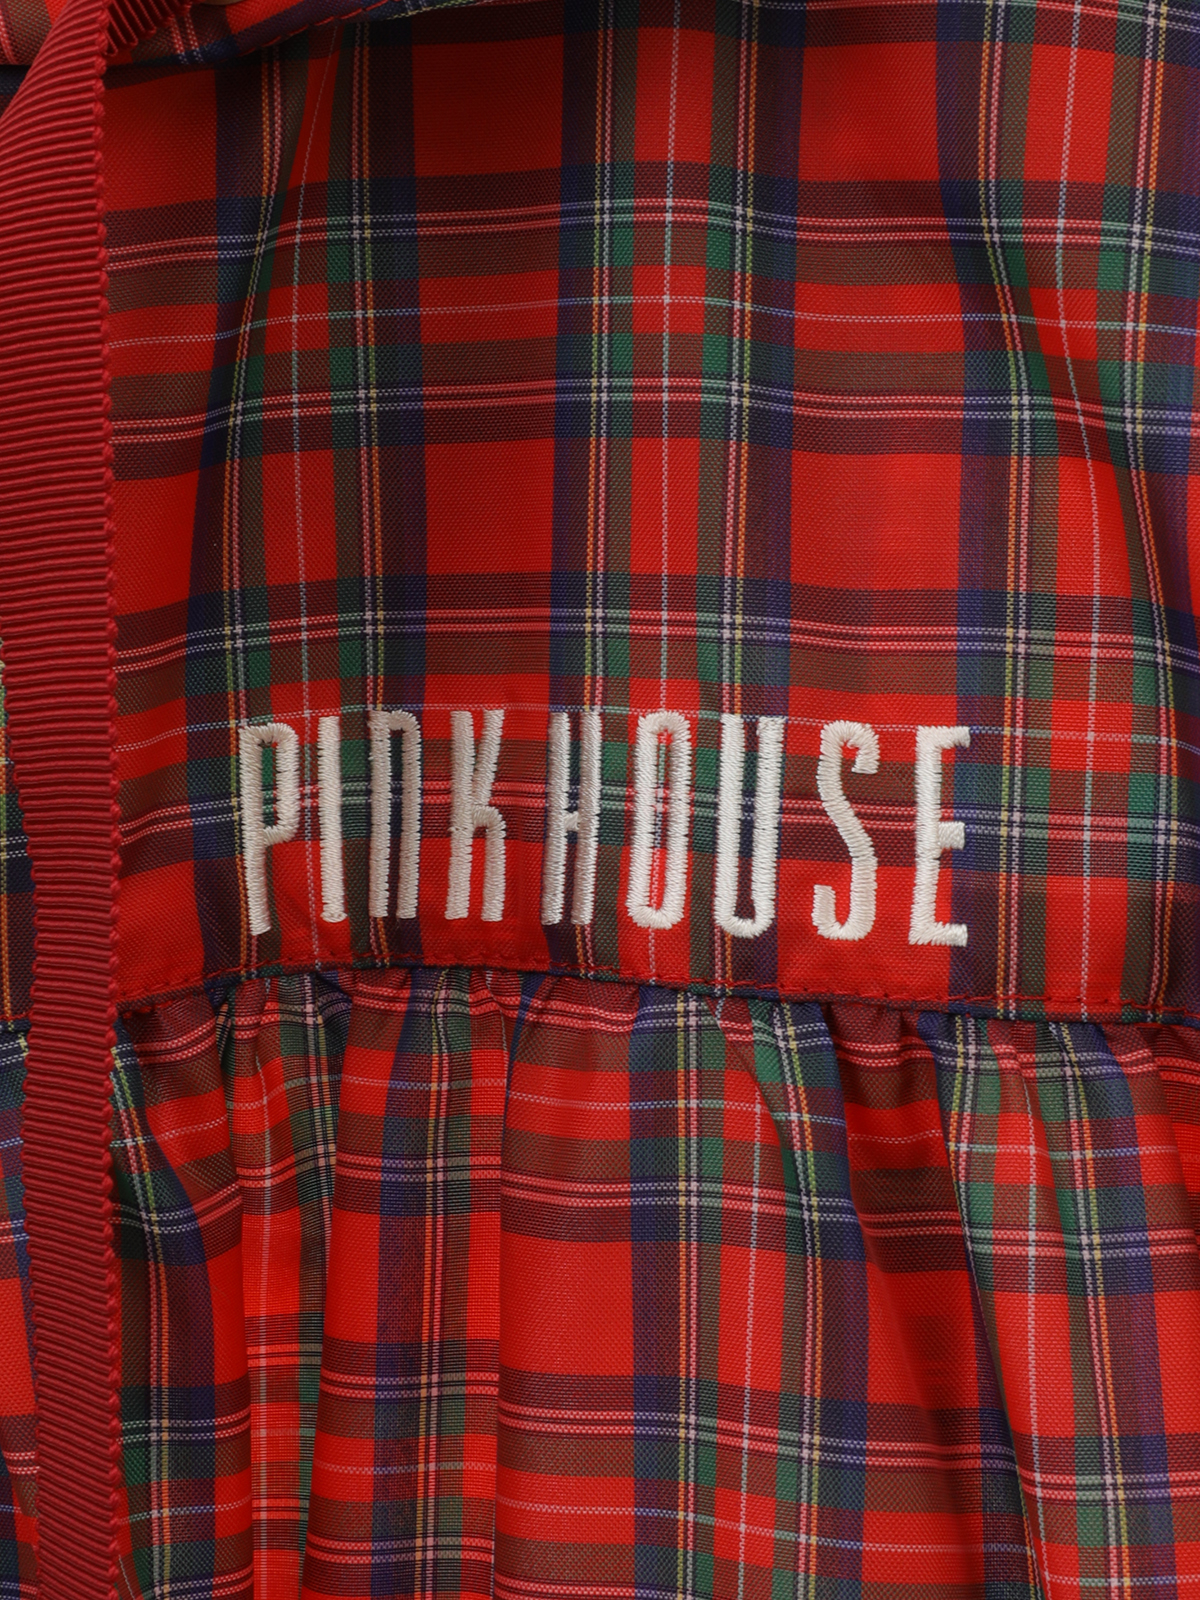 PINK HOUSE  黒チェック使いワンピース  ピンクハウス